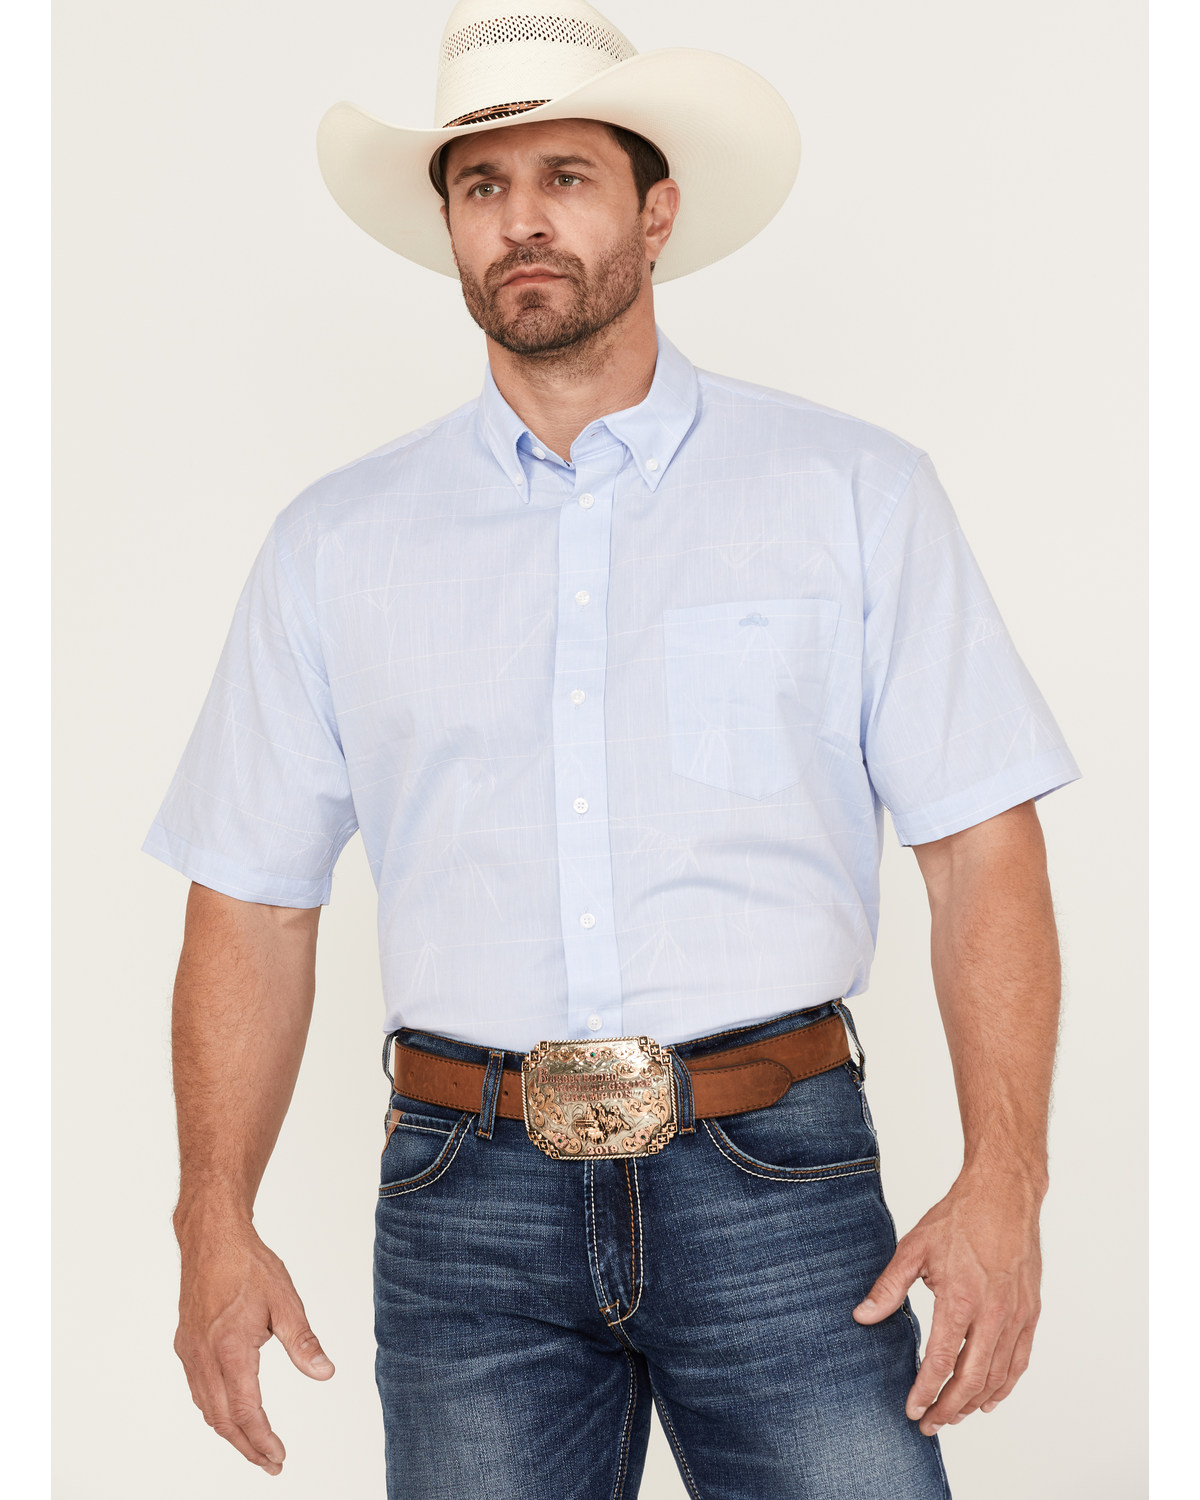 Resistol Men's Bell Solid Short Sleeve Button Down Western Shirt